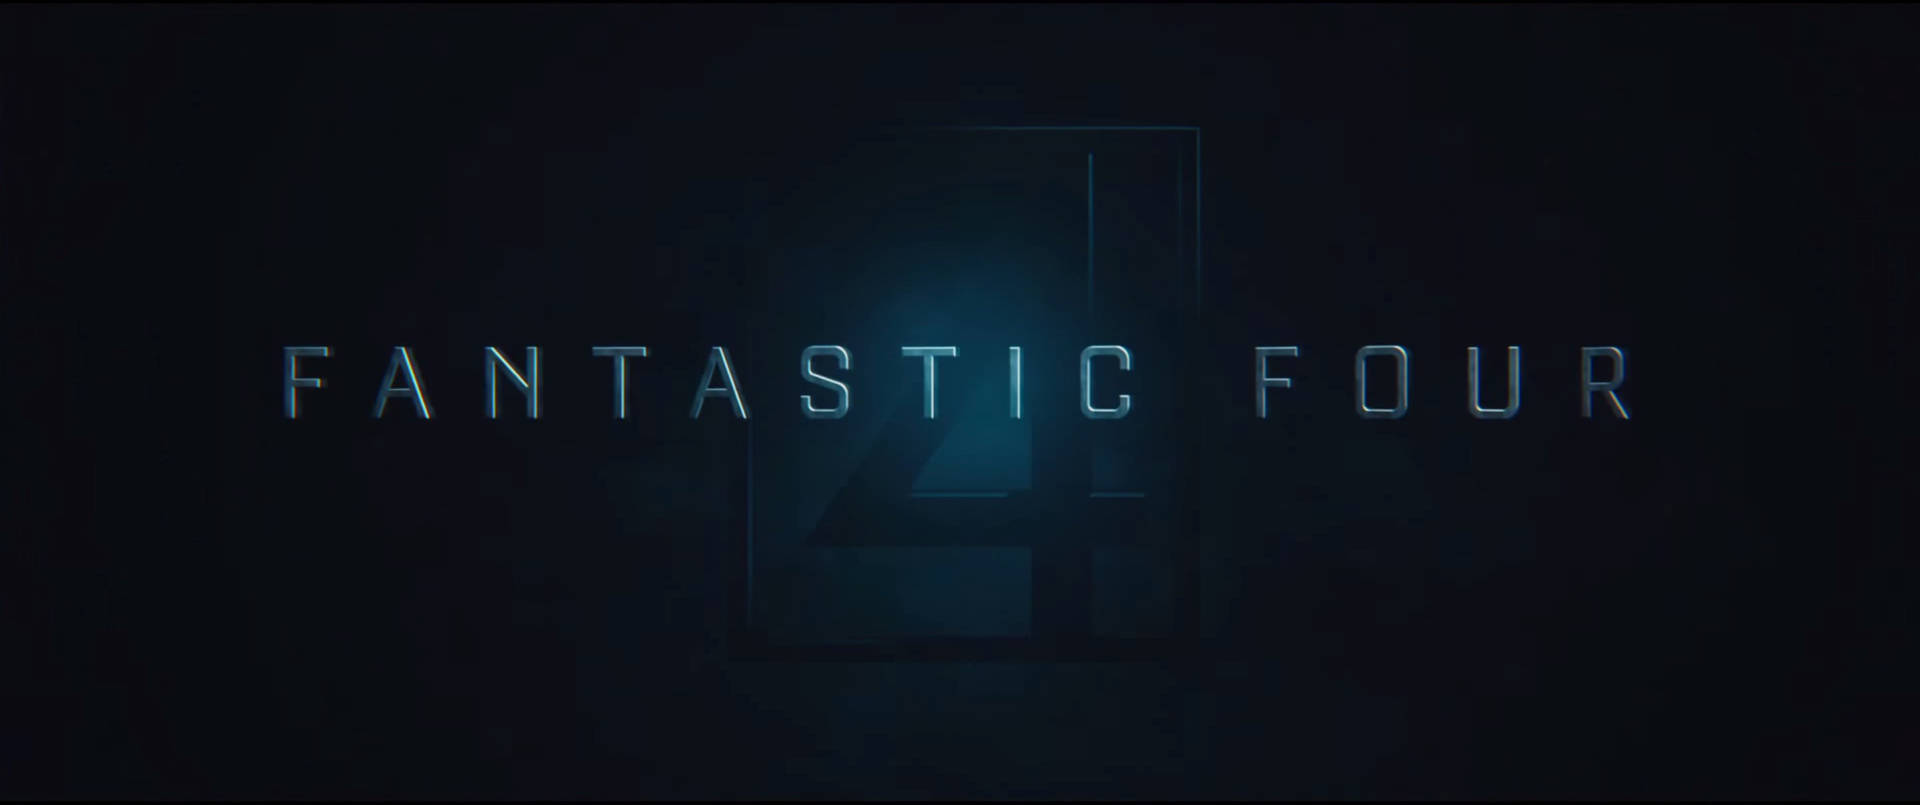 Fantastiske fire 2015-film logo Wallpaper